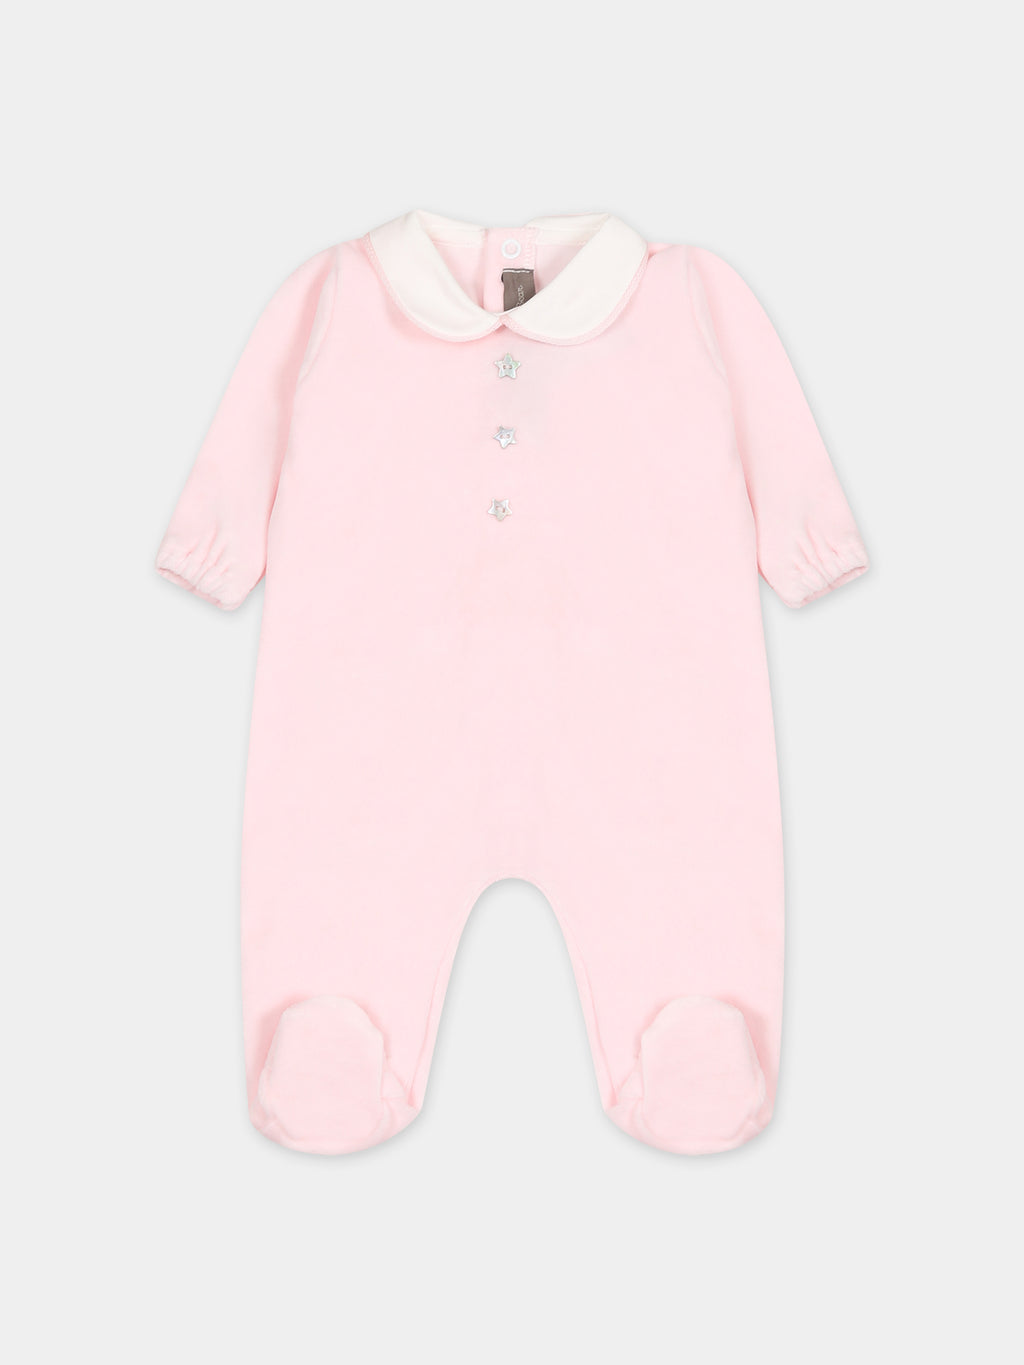 Tutina rosa per neonata